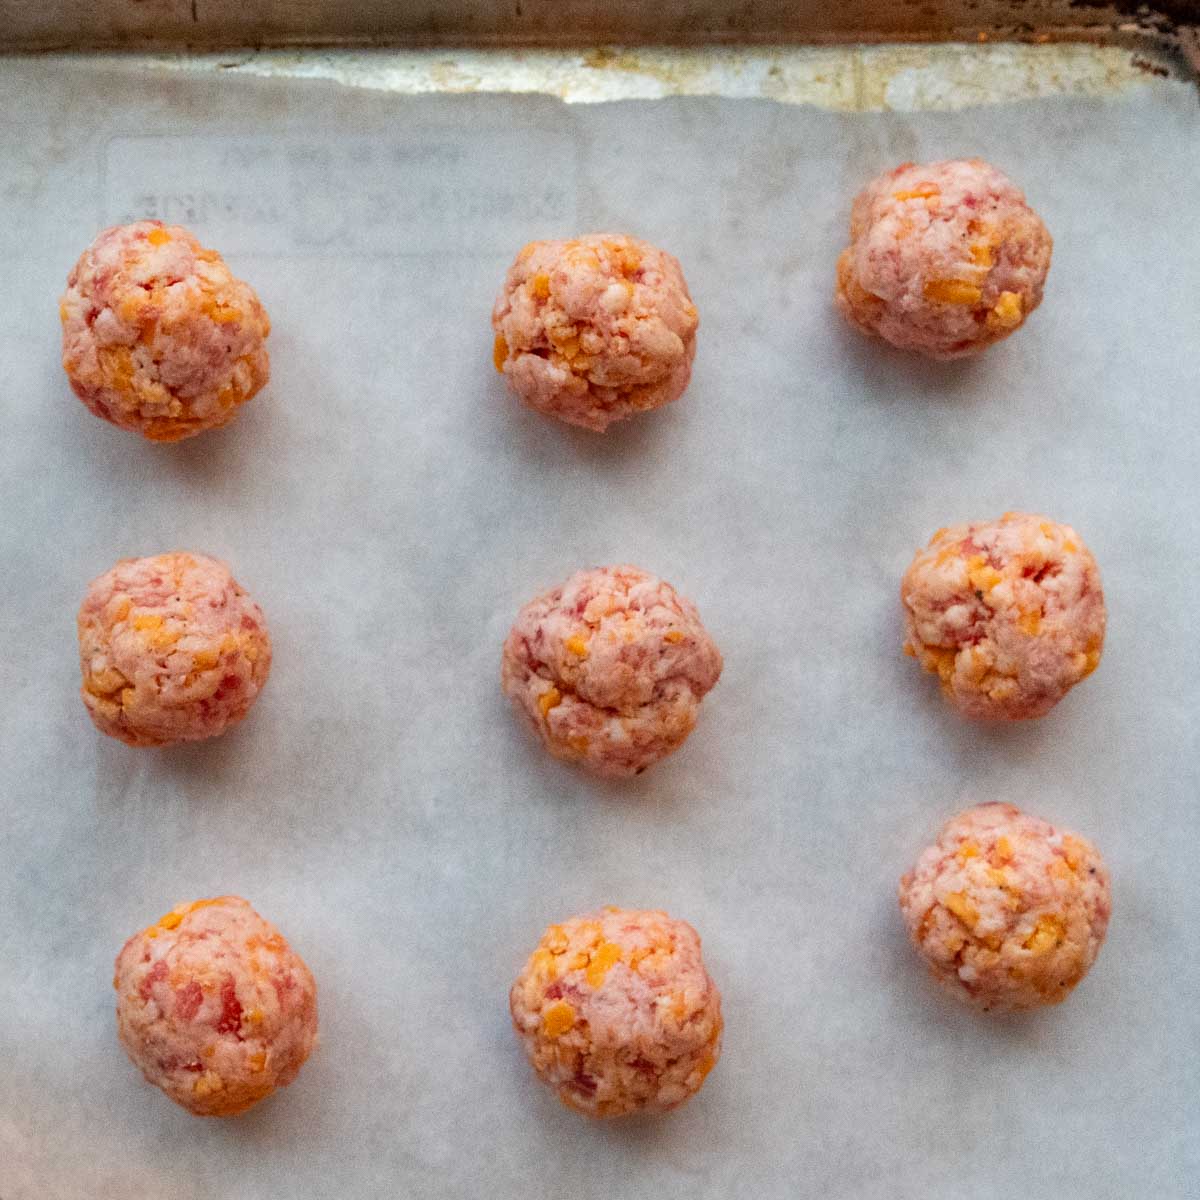 The balls shaped on a baking sheet.